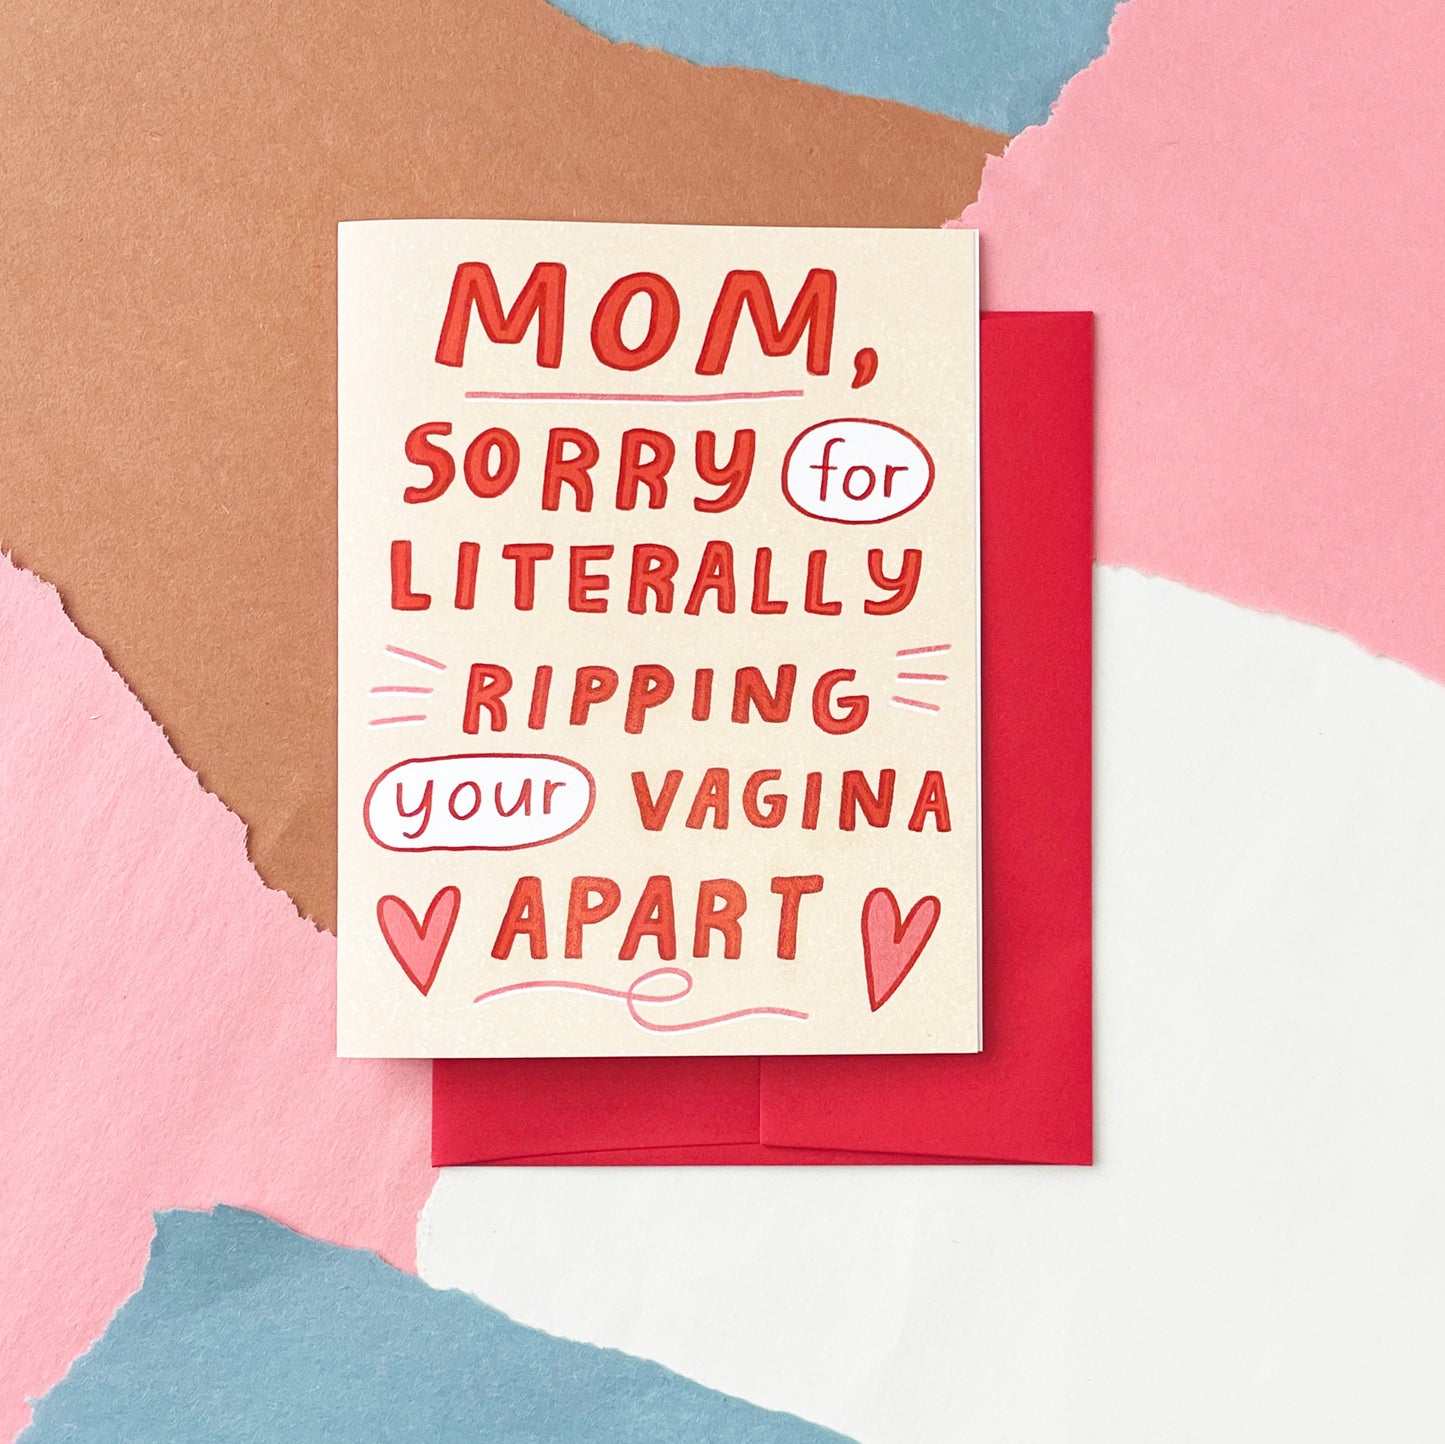 Sorry Mom Card